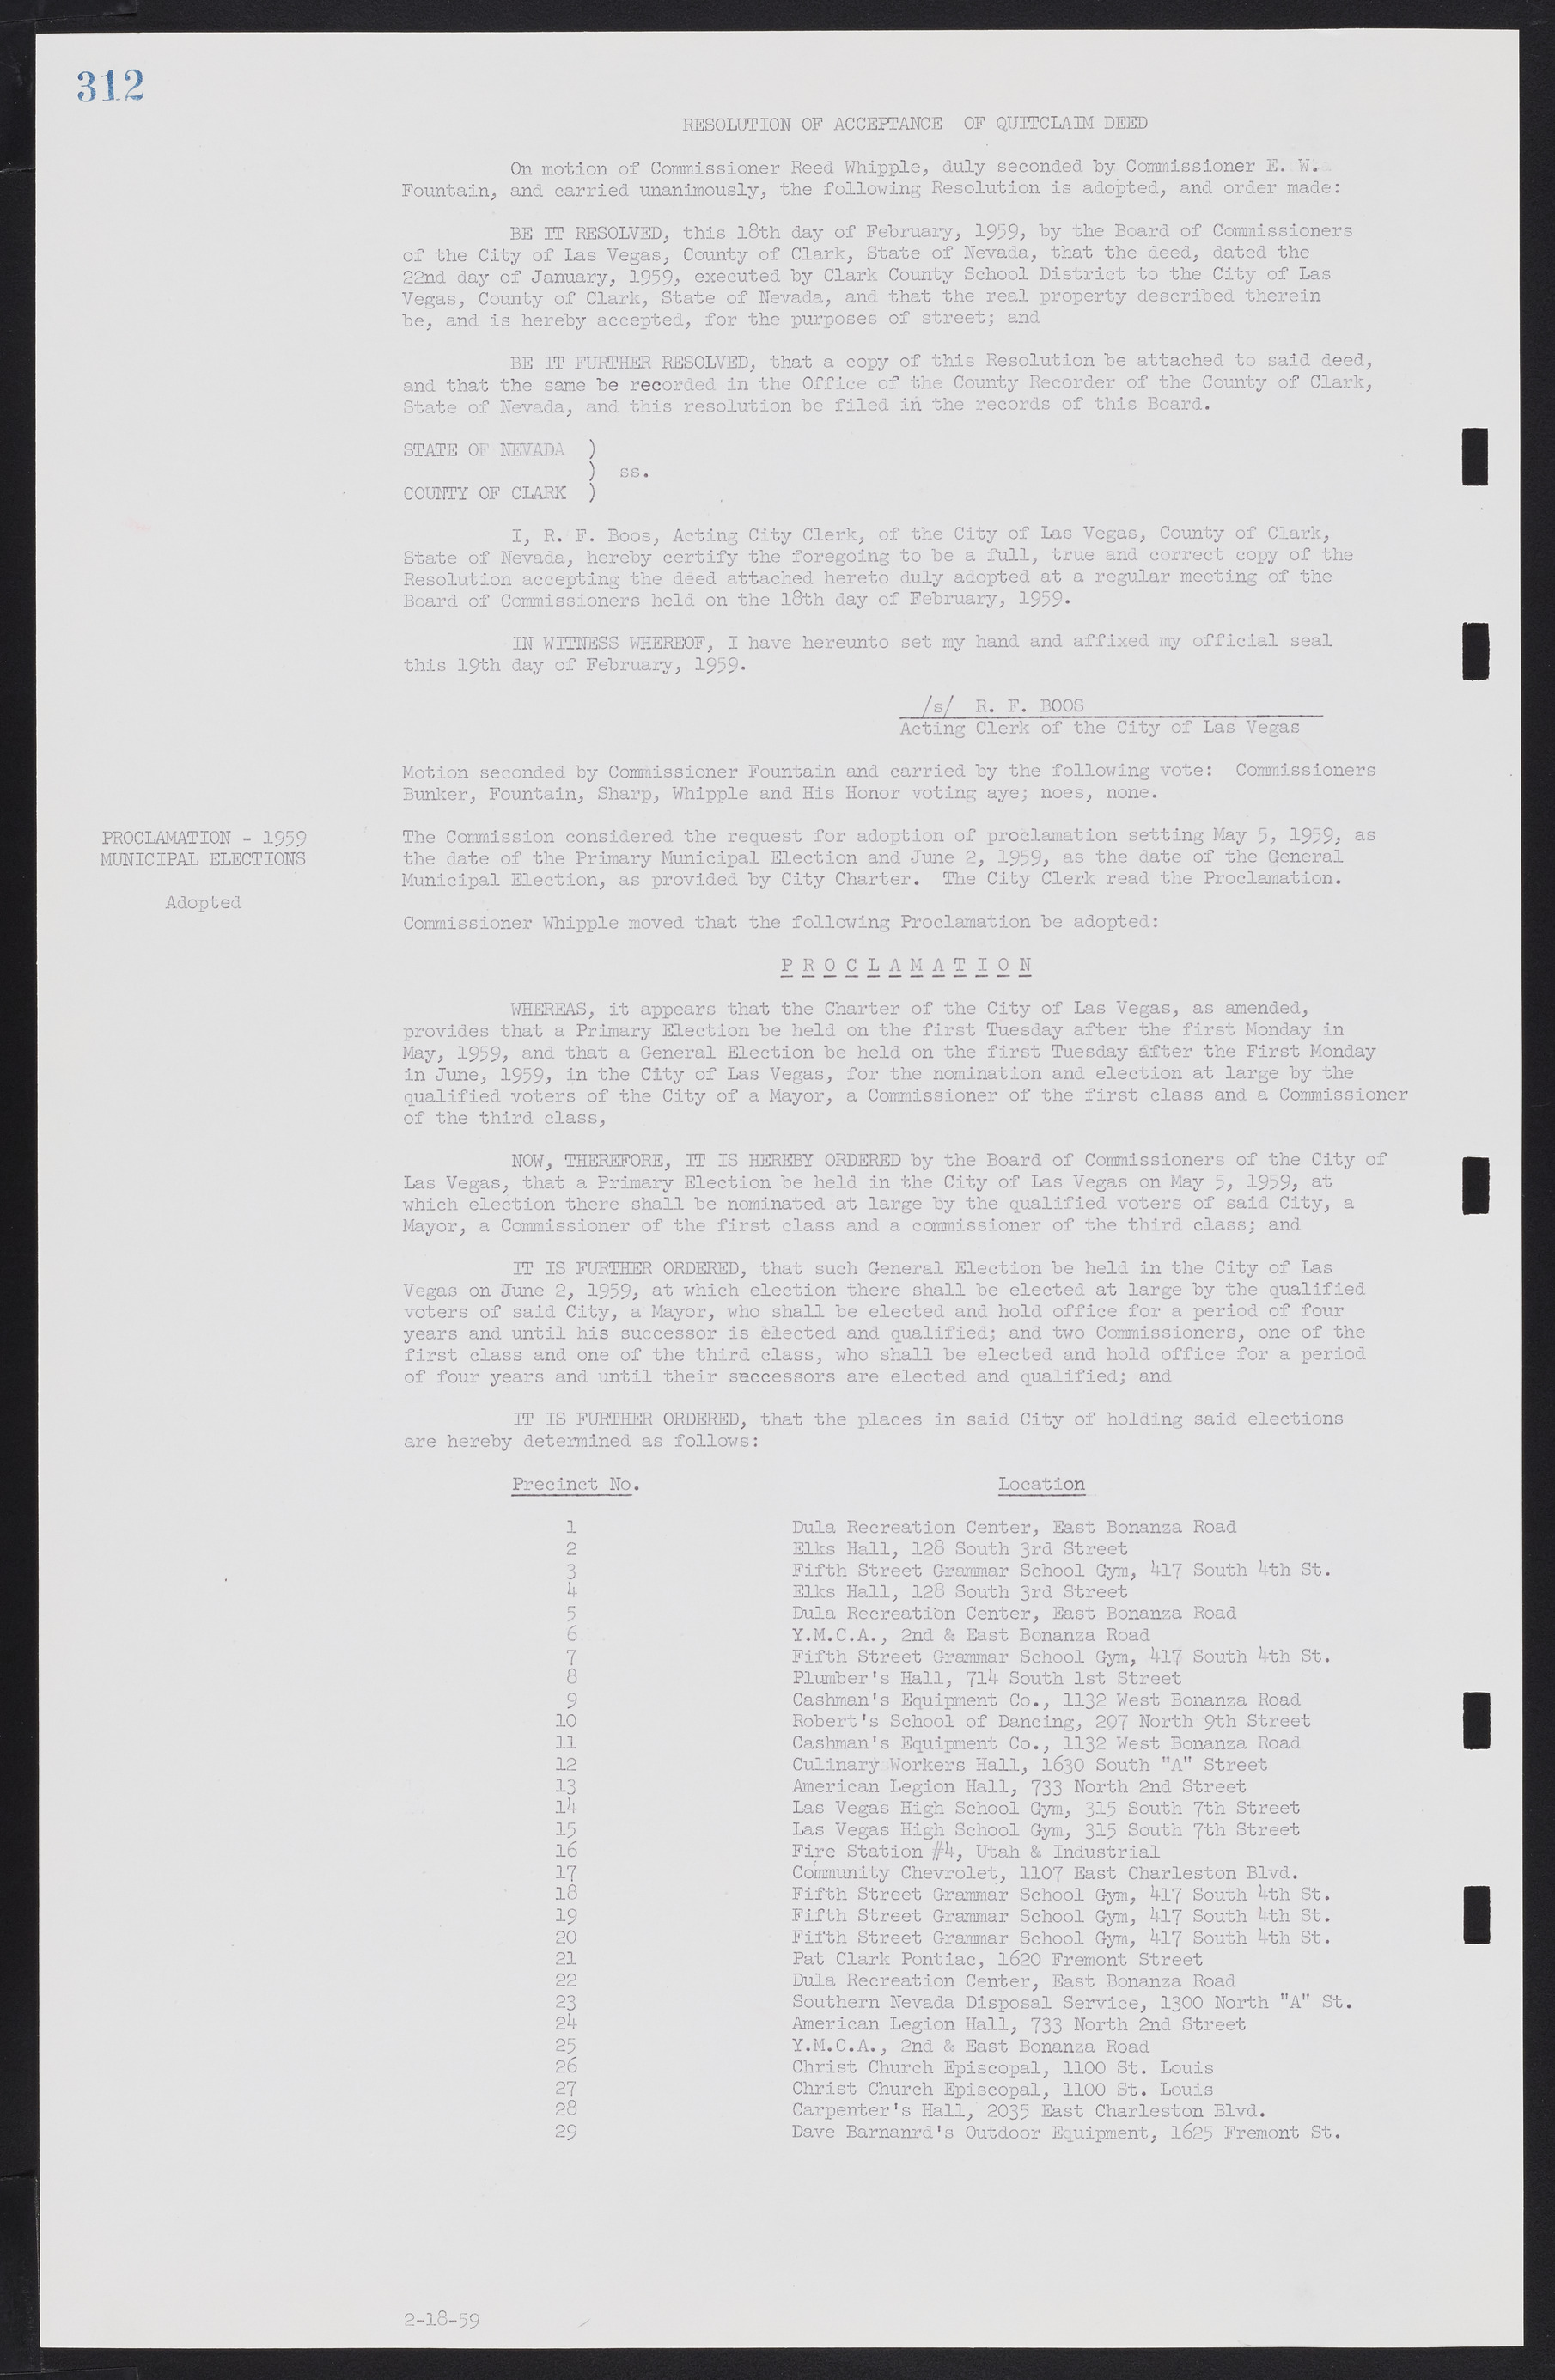 Las Vegas City Commission Minutes, November 20, 1957 to December 2, 1959, lvc000011-320